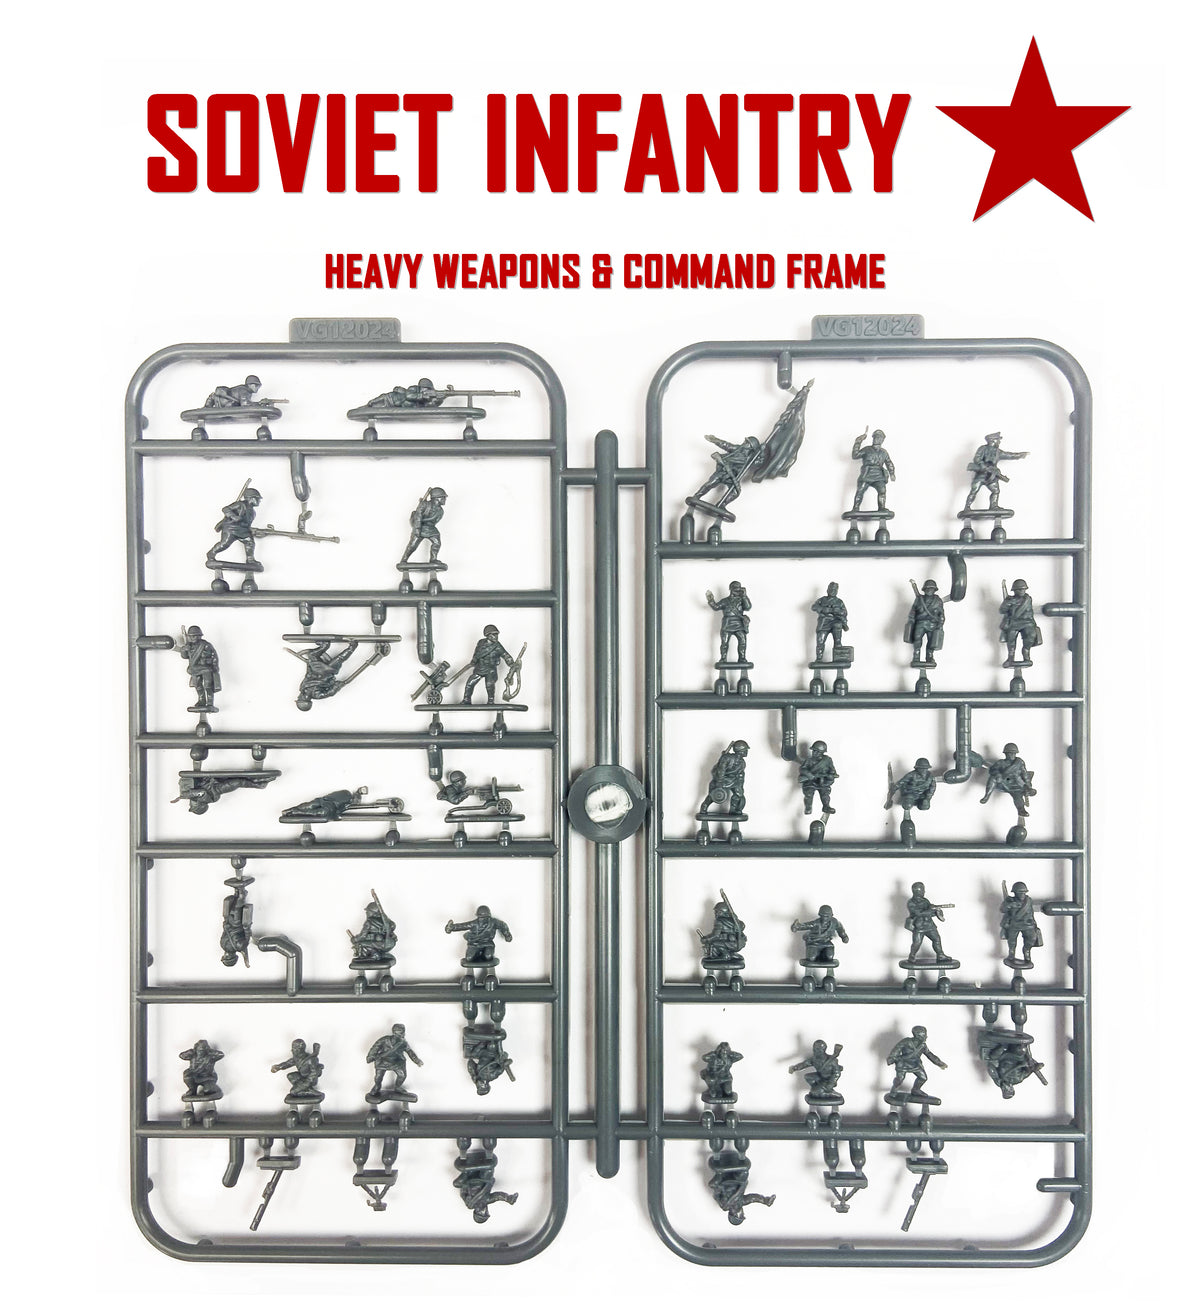 Fanteria sovietica e armi pesanti